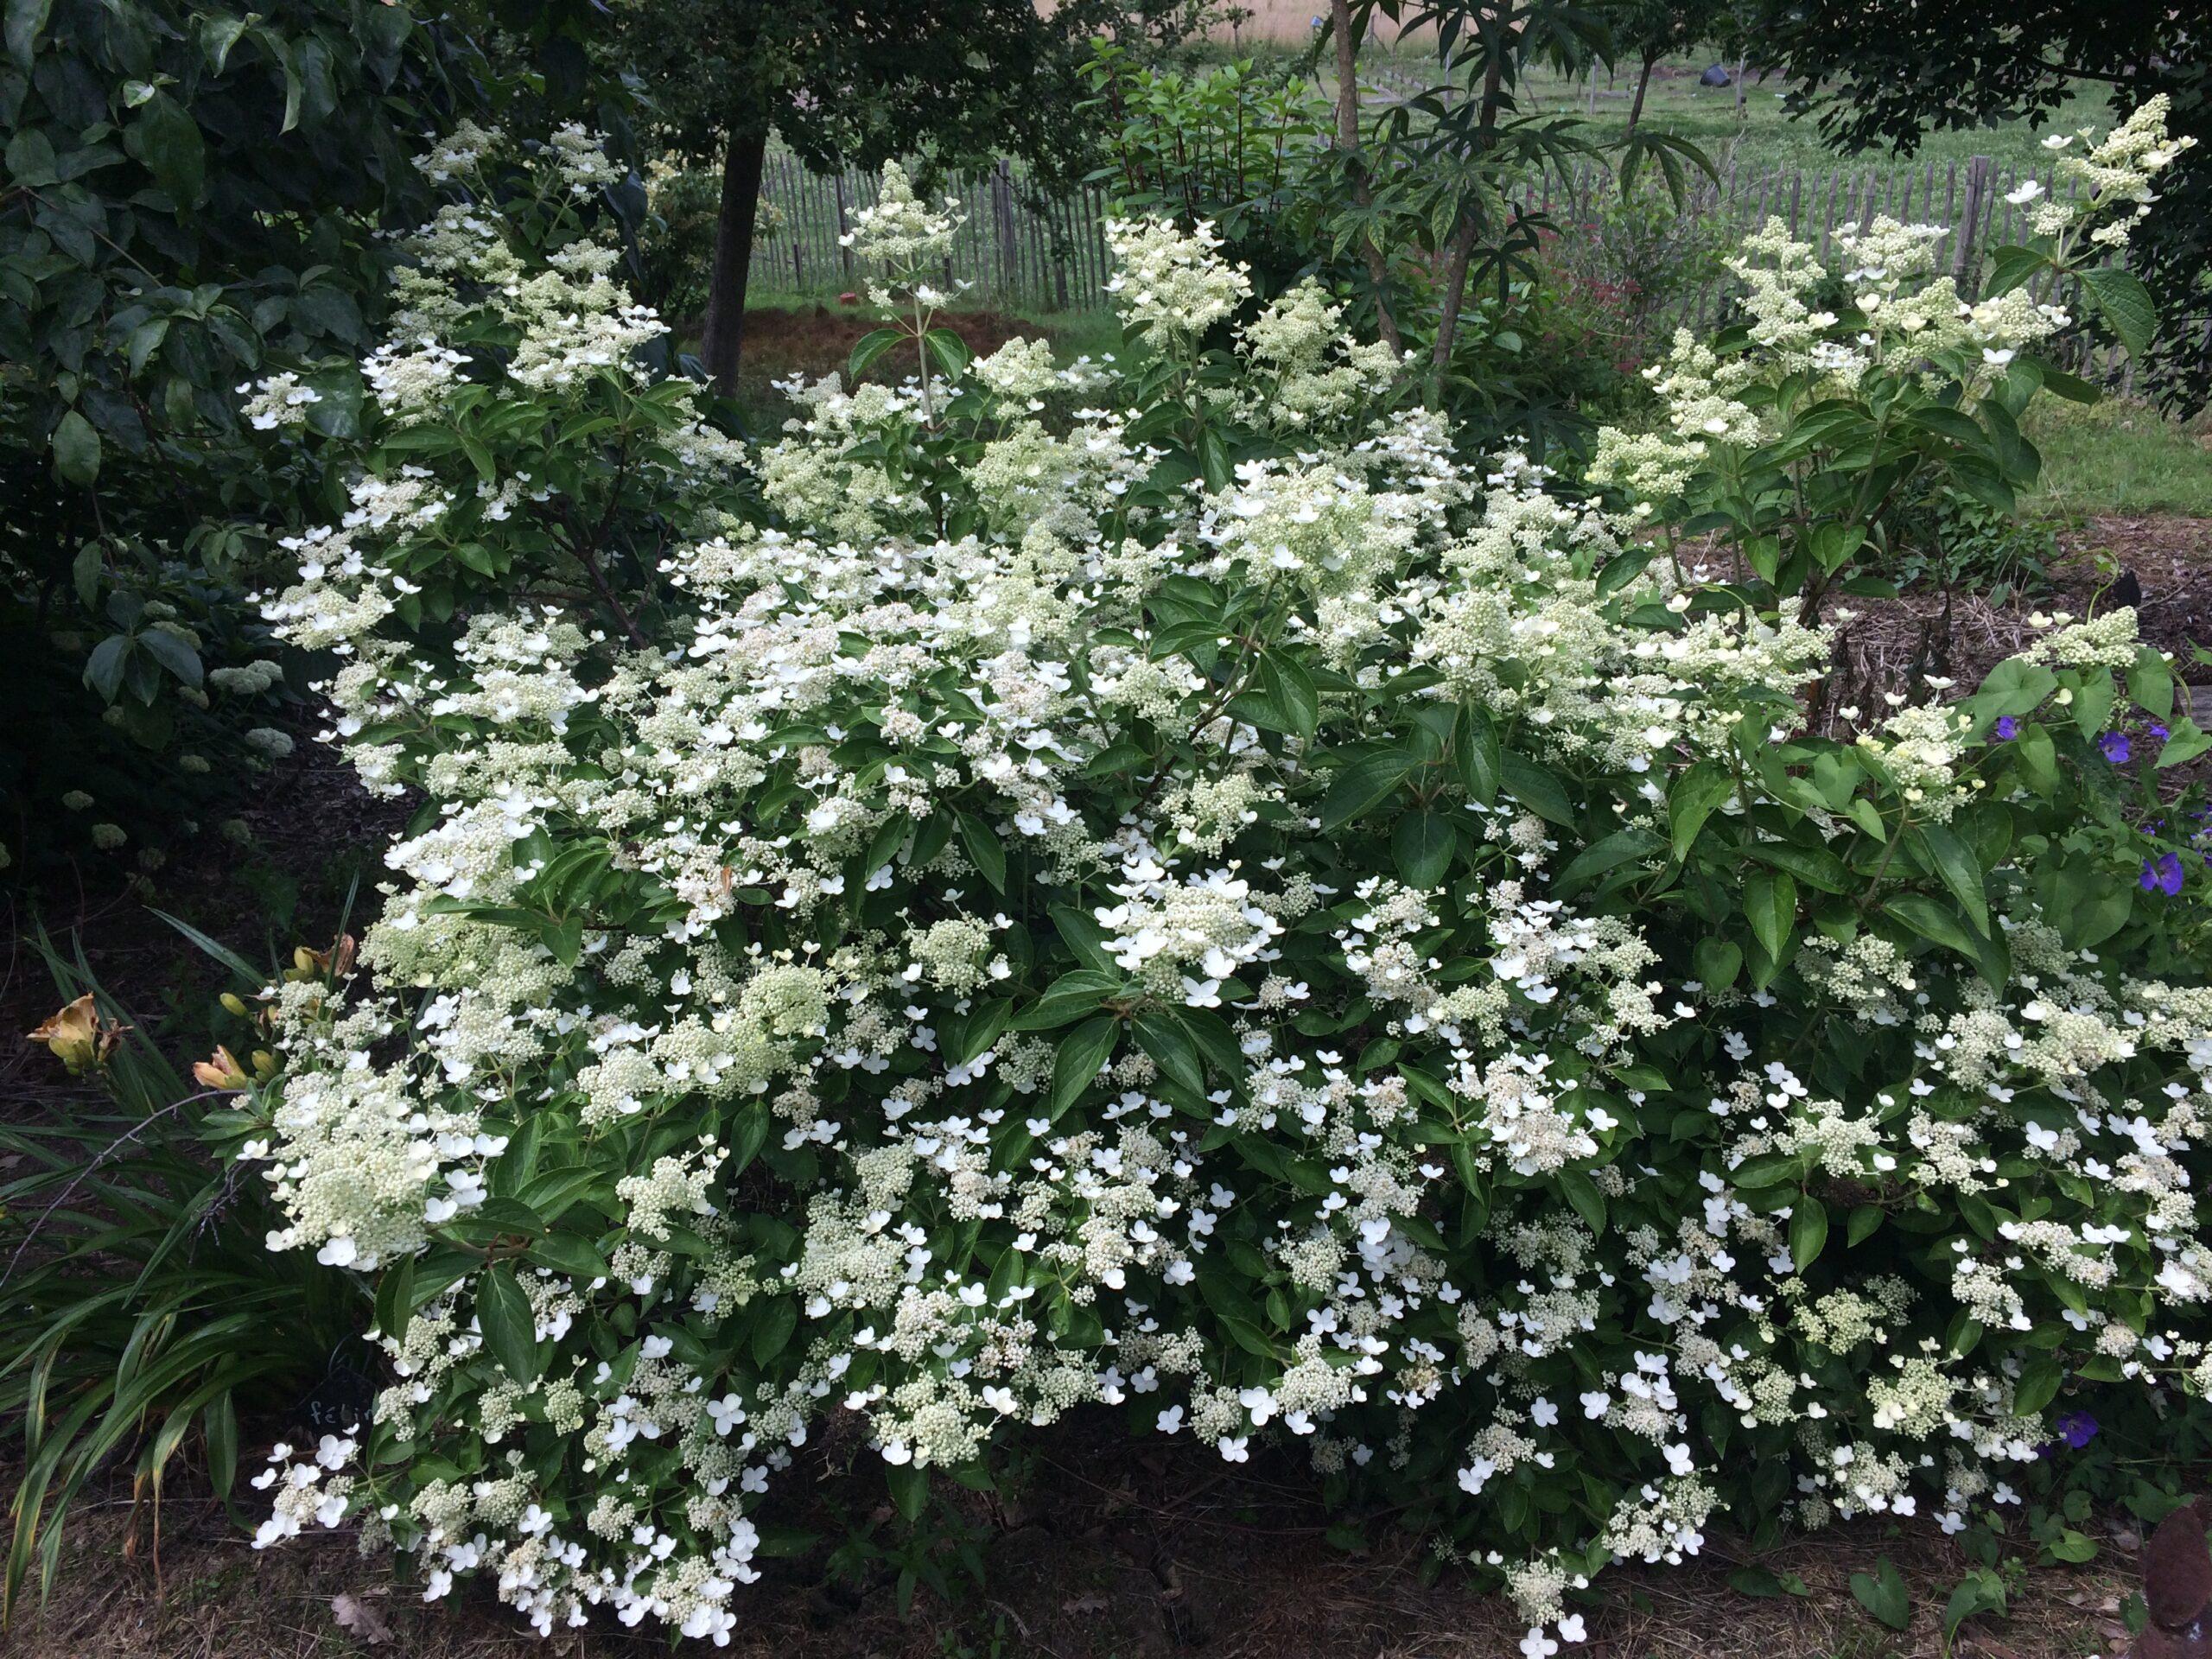 Hydrangea paniculata <span>‘Prim White’</span>